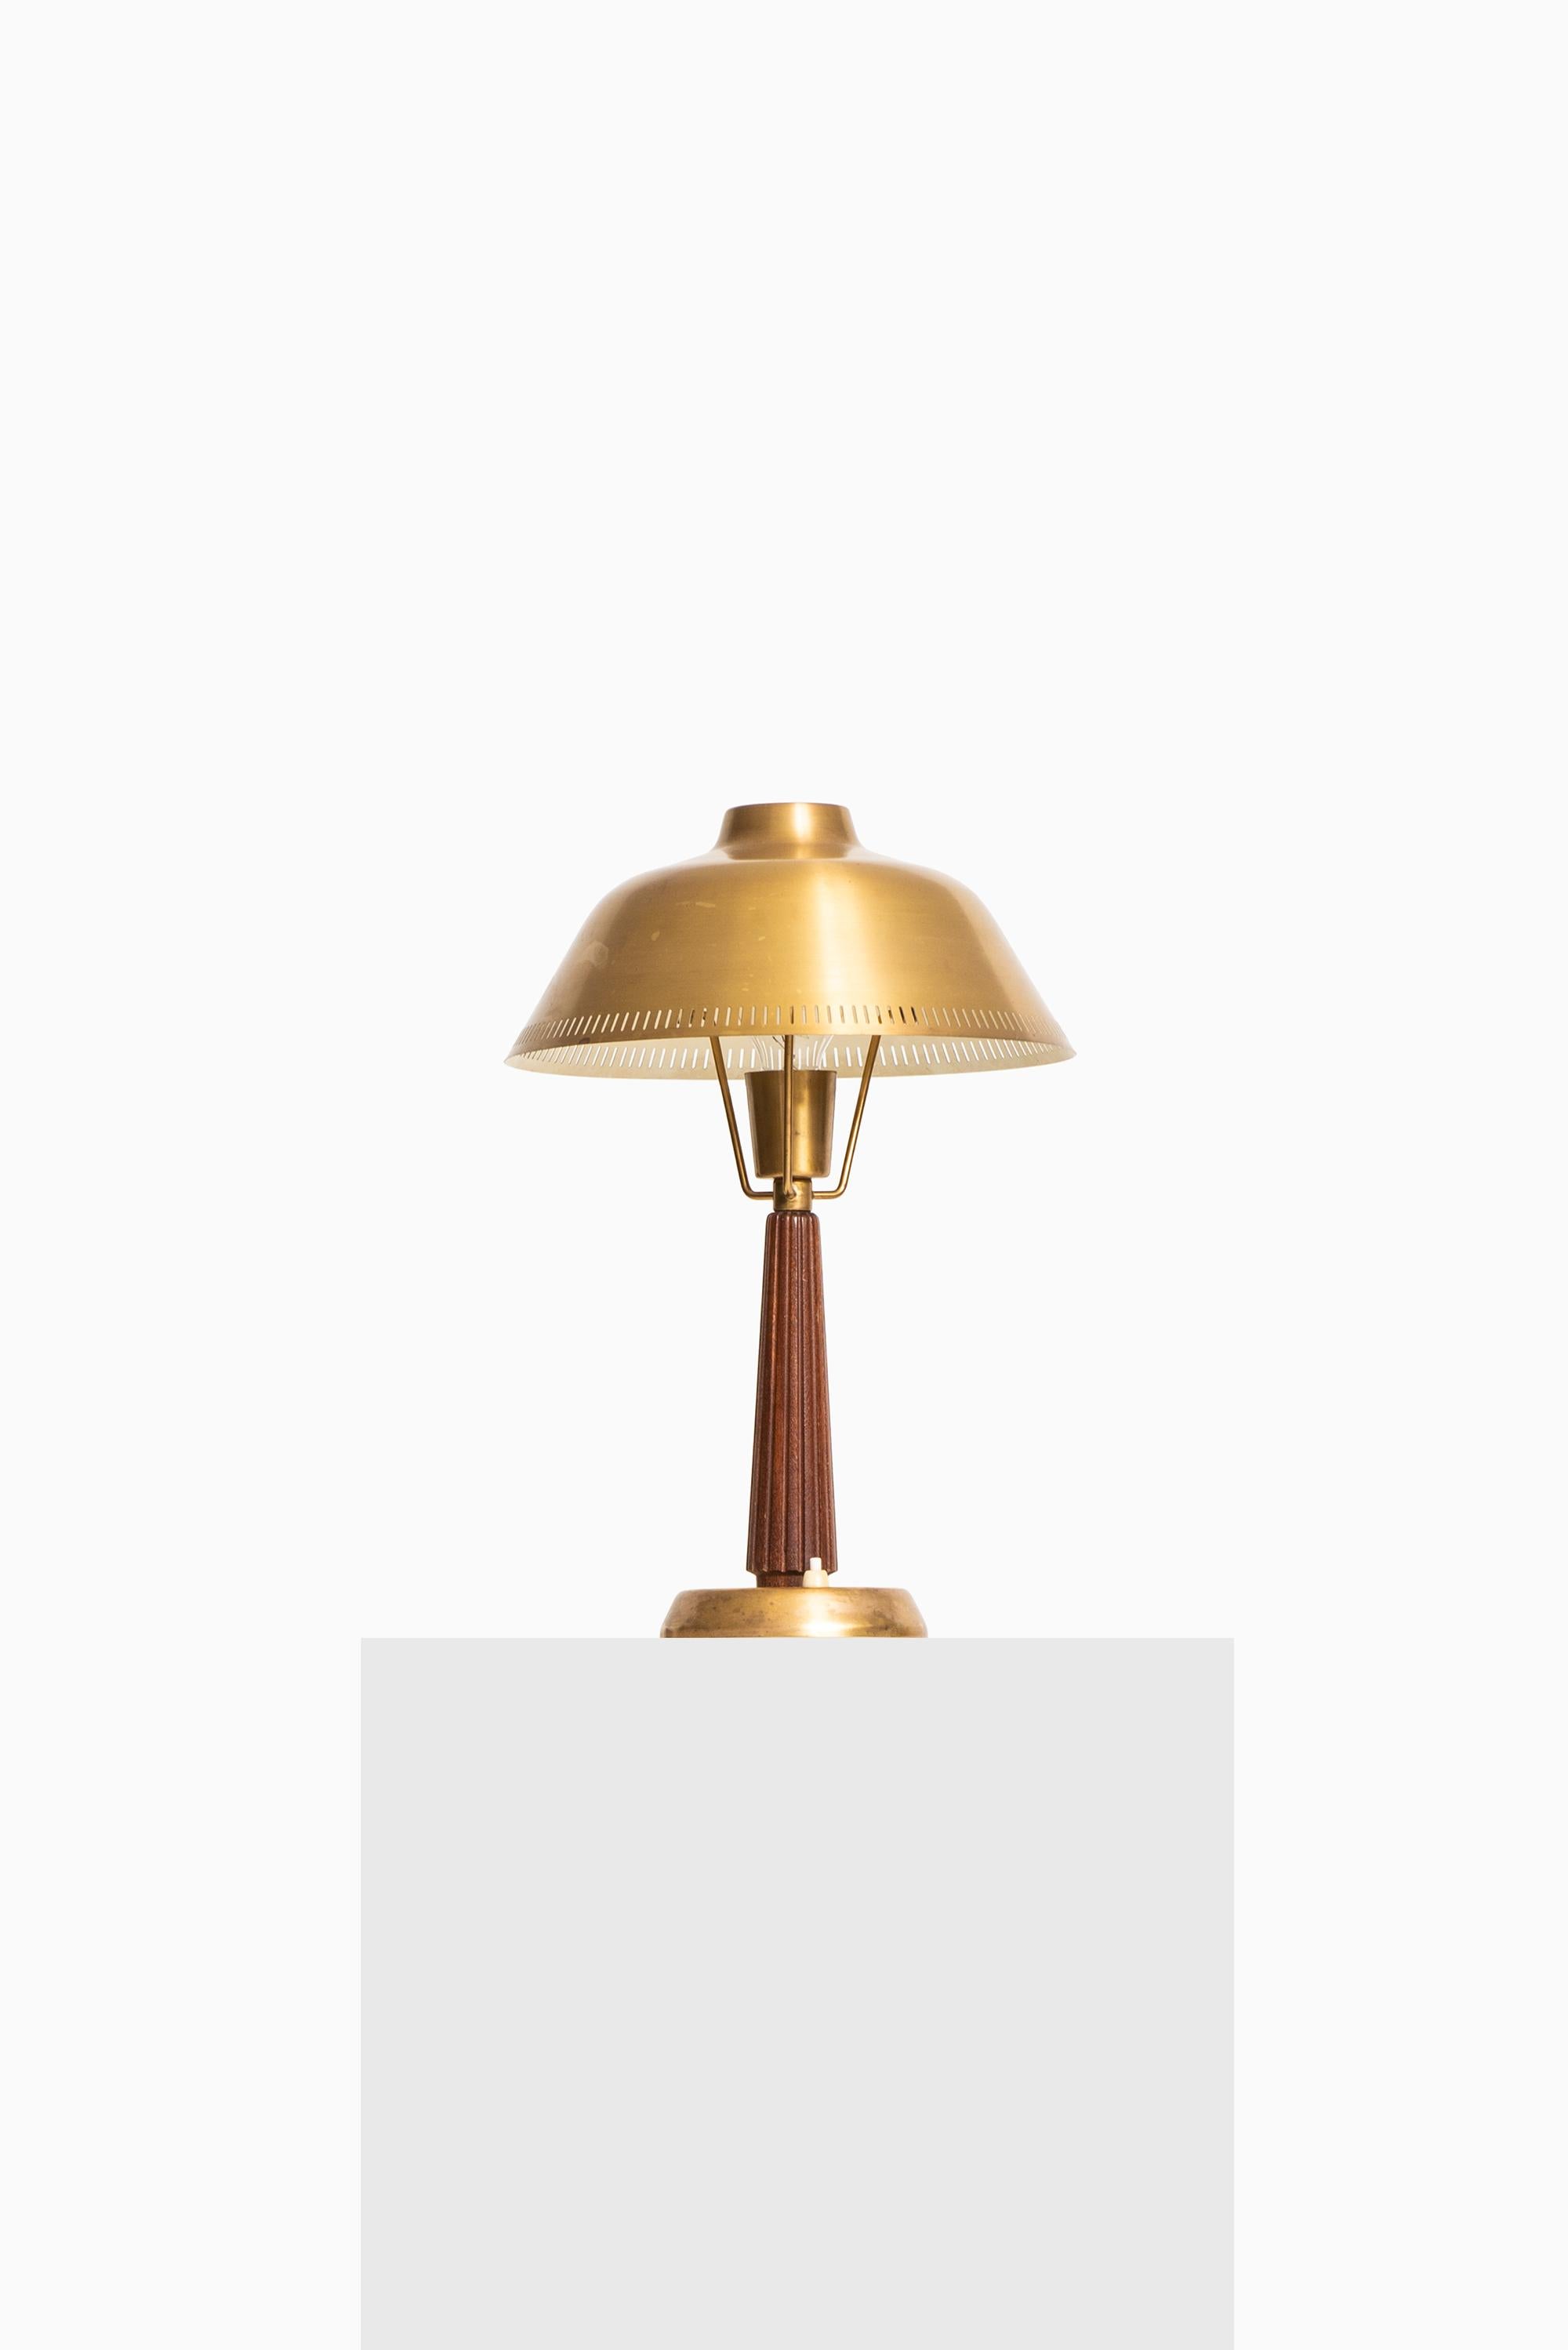 Scandinavian Modern Hans Bergström Table Lamp Produced by ASEA in Sweden For Sale